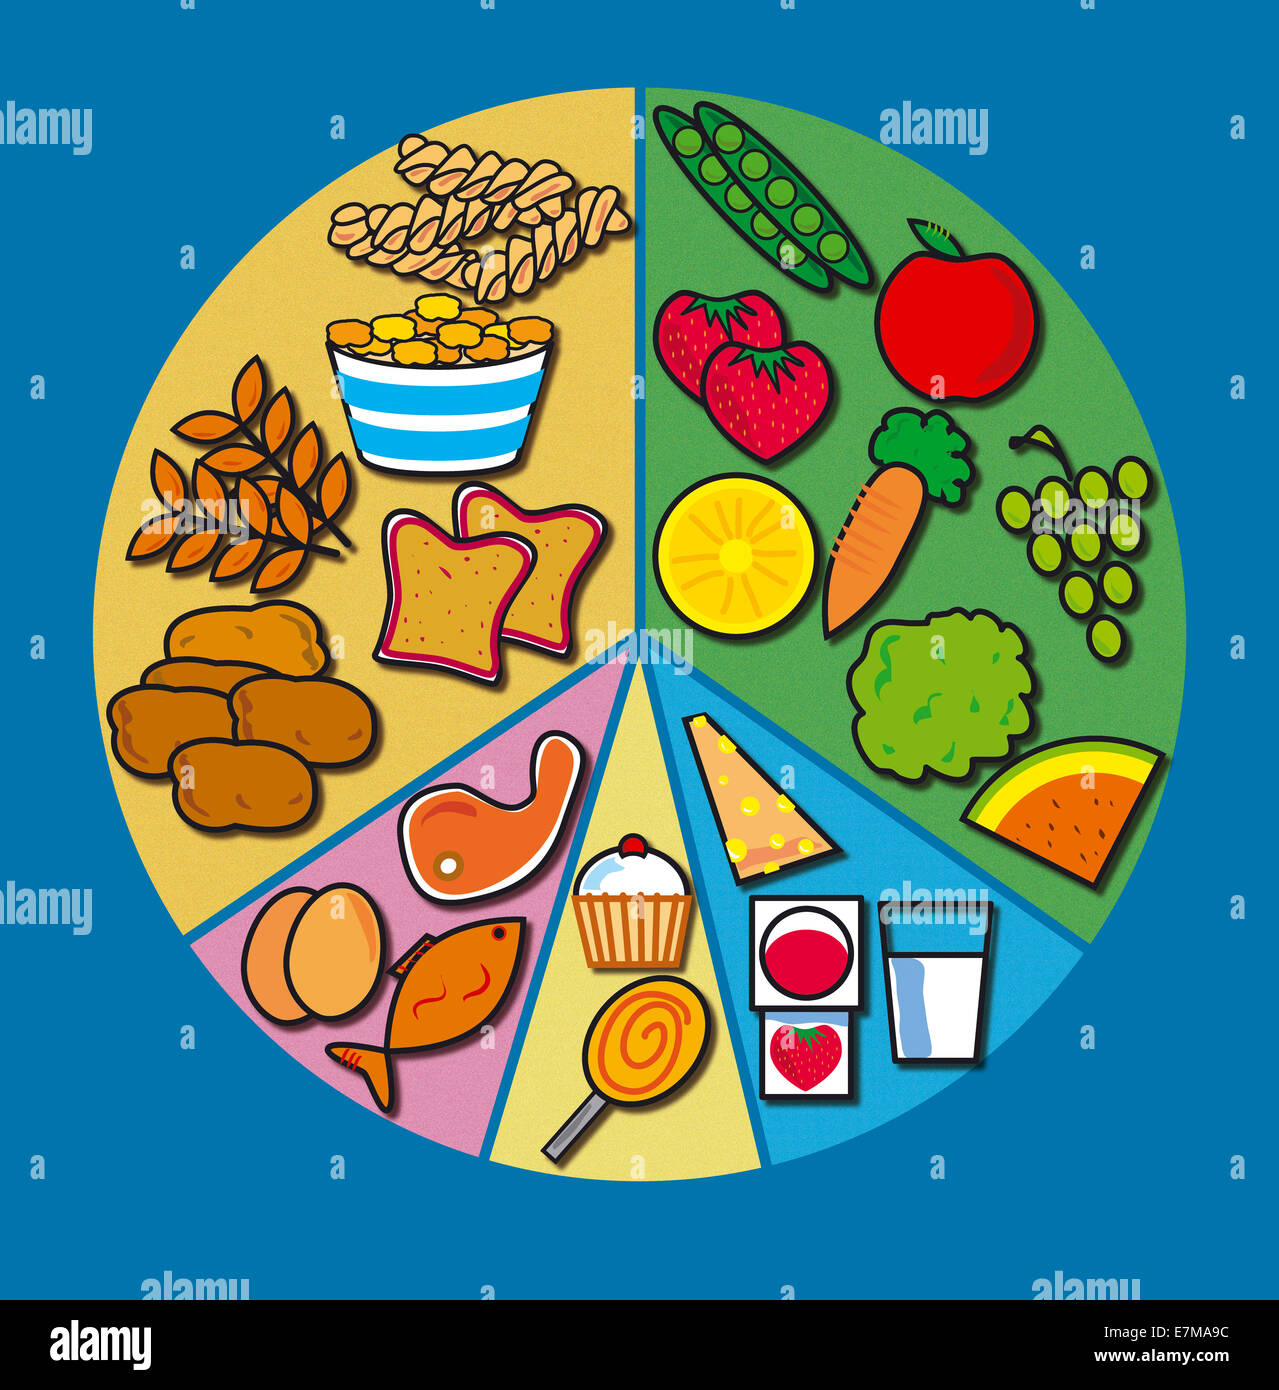 Dieta Bilanciata Immagini e Fotos Stock - Alamy